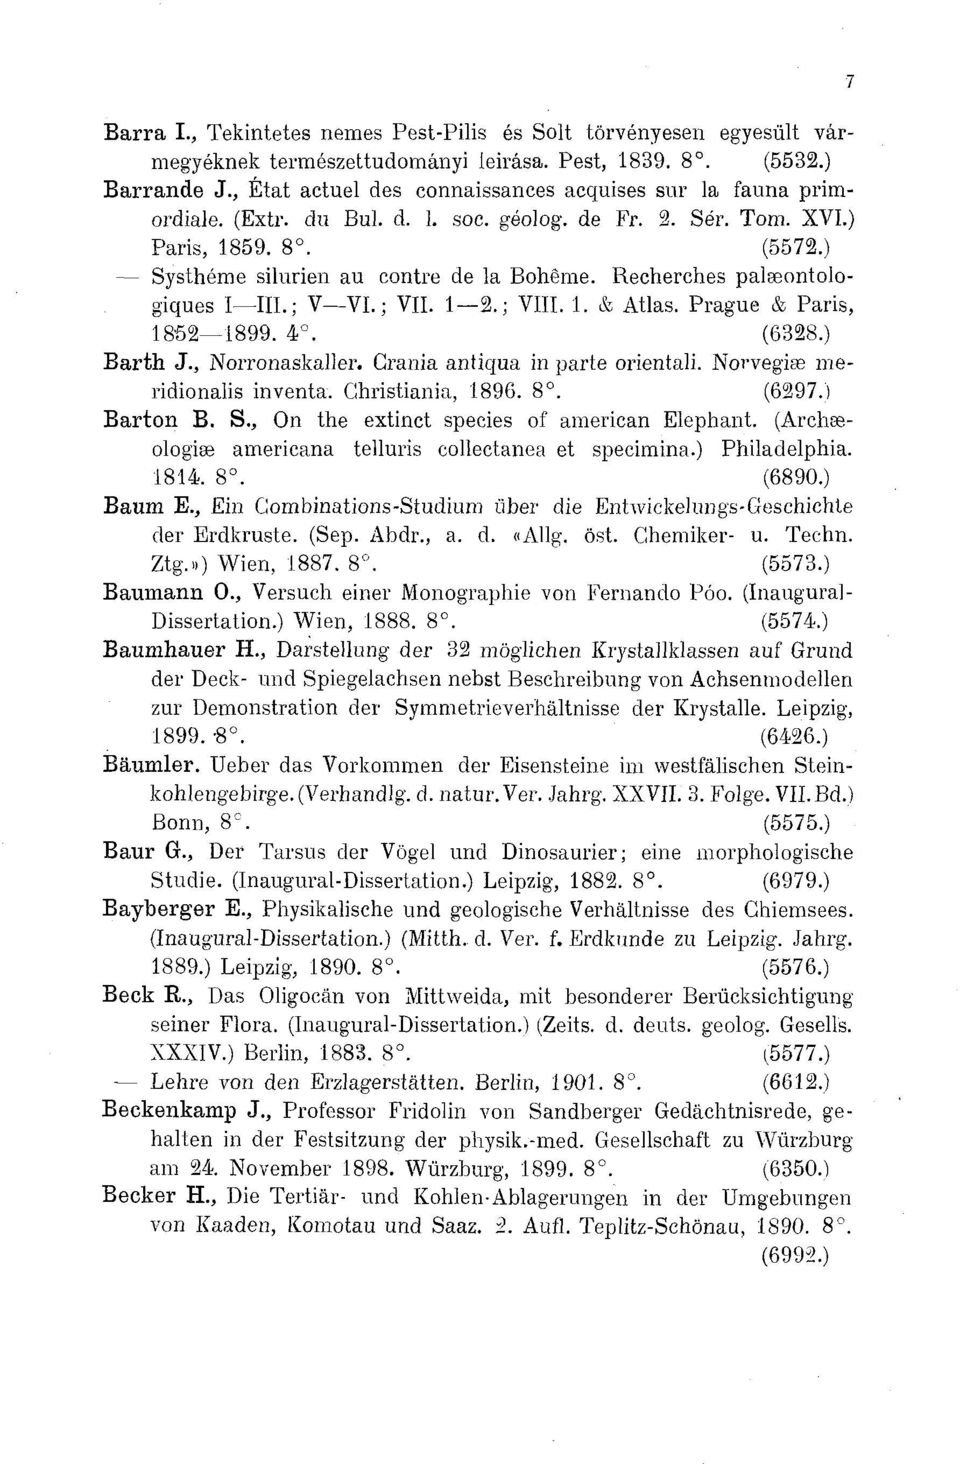 Recherches palœontologiques I III.; V VI. ; VIL 1 2.; VIII. 1. & Atlas. Prague & Paris, 1862 1899. 4. (6328 Barth J., Norronaskaller. Crania antiqua in parte orientali. Norvégiáé meridionalis inventa.